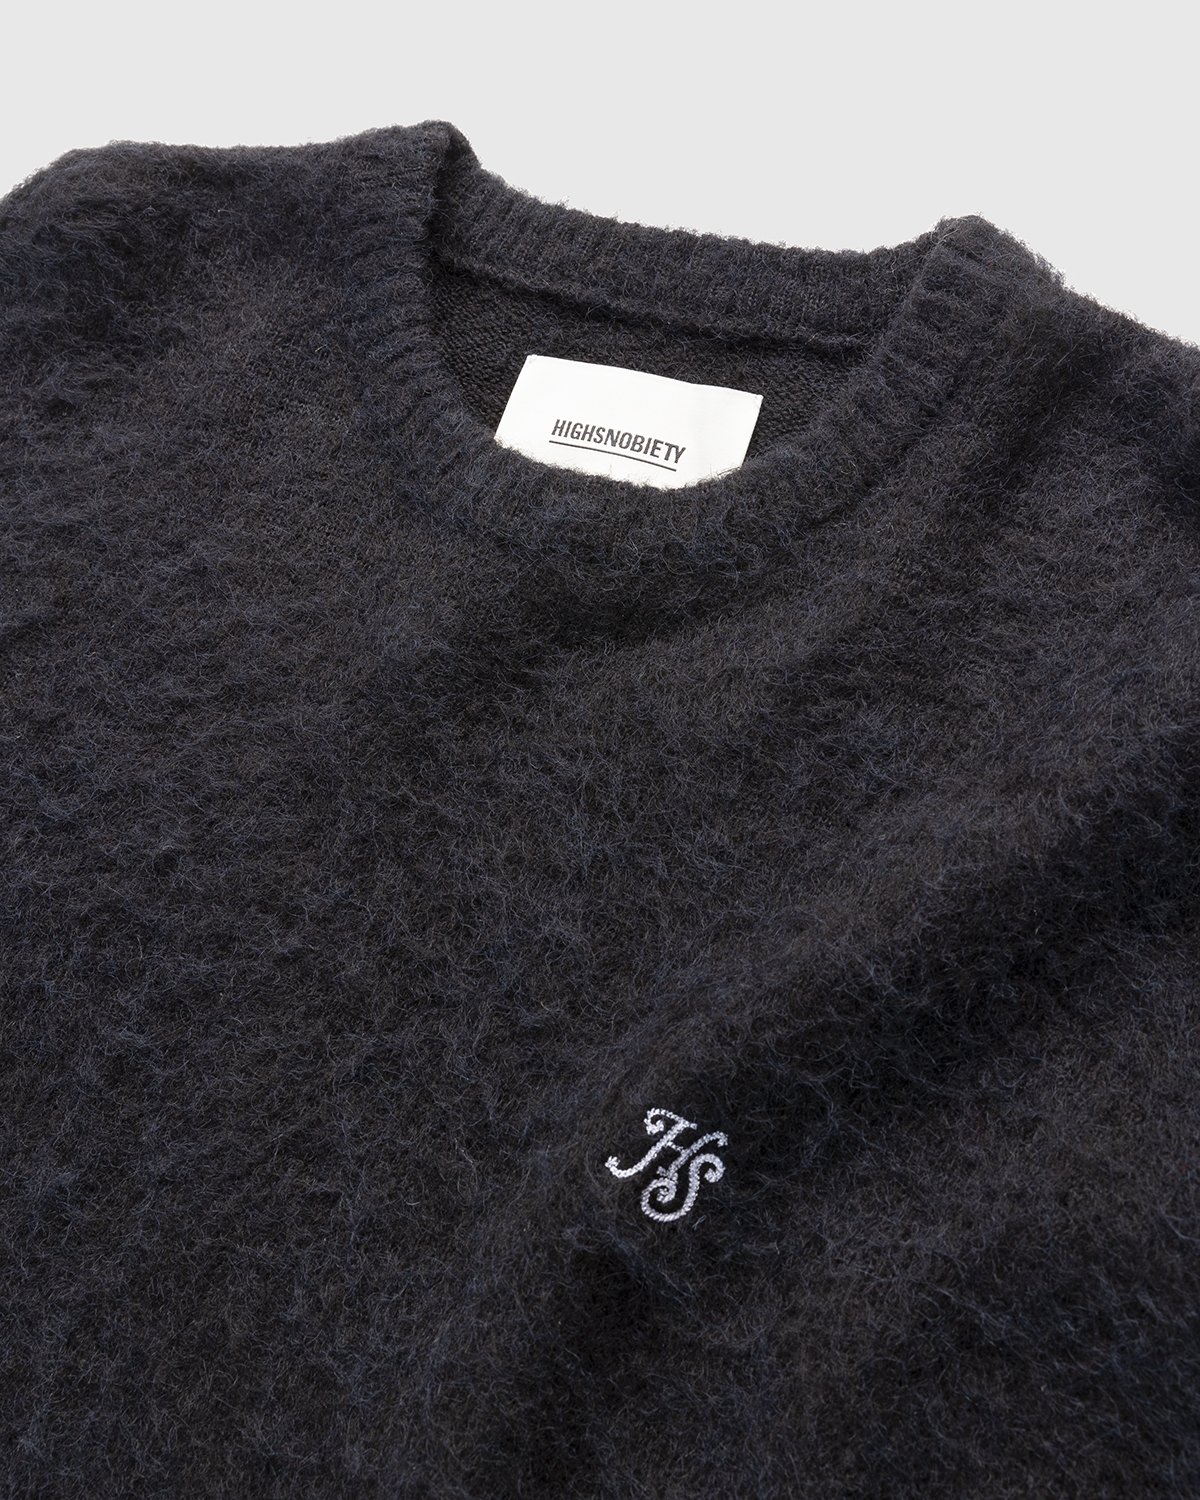 Highsnobiety - Mono Alpaca Sweater Black - Clothing - Black - Image 3